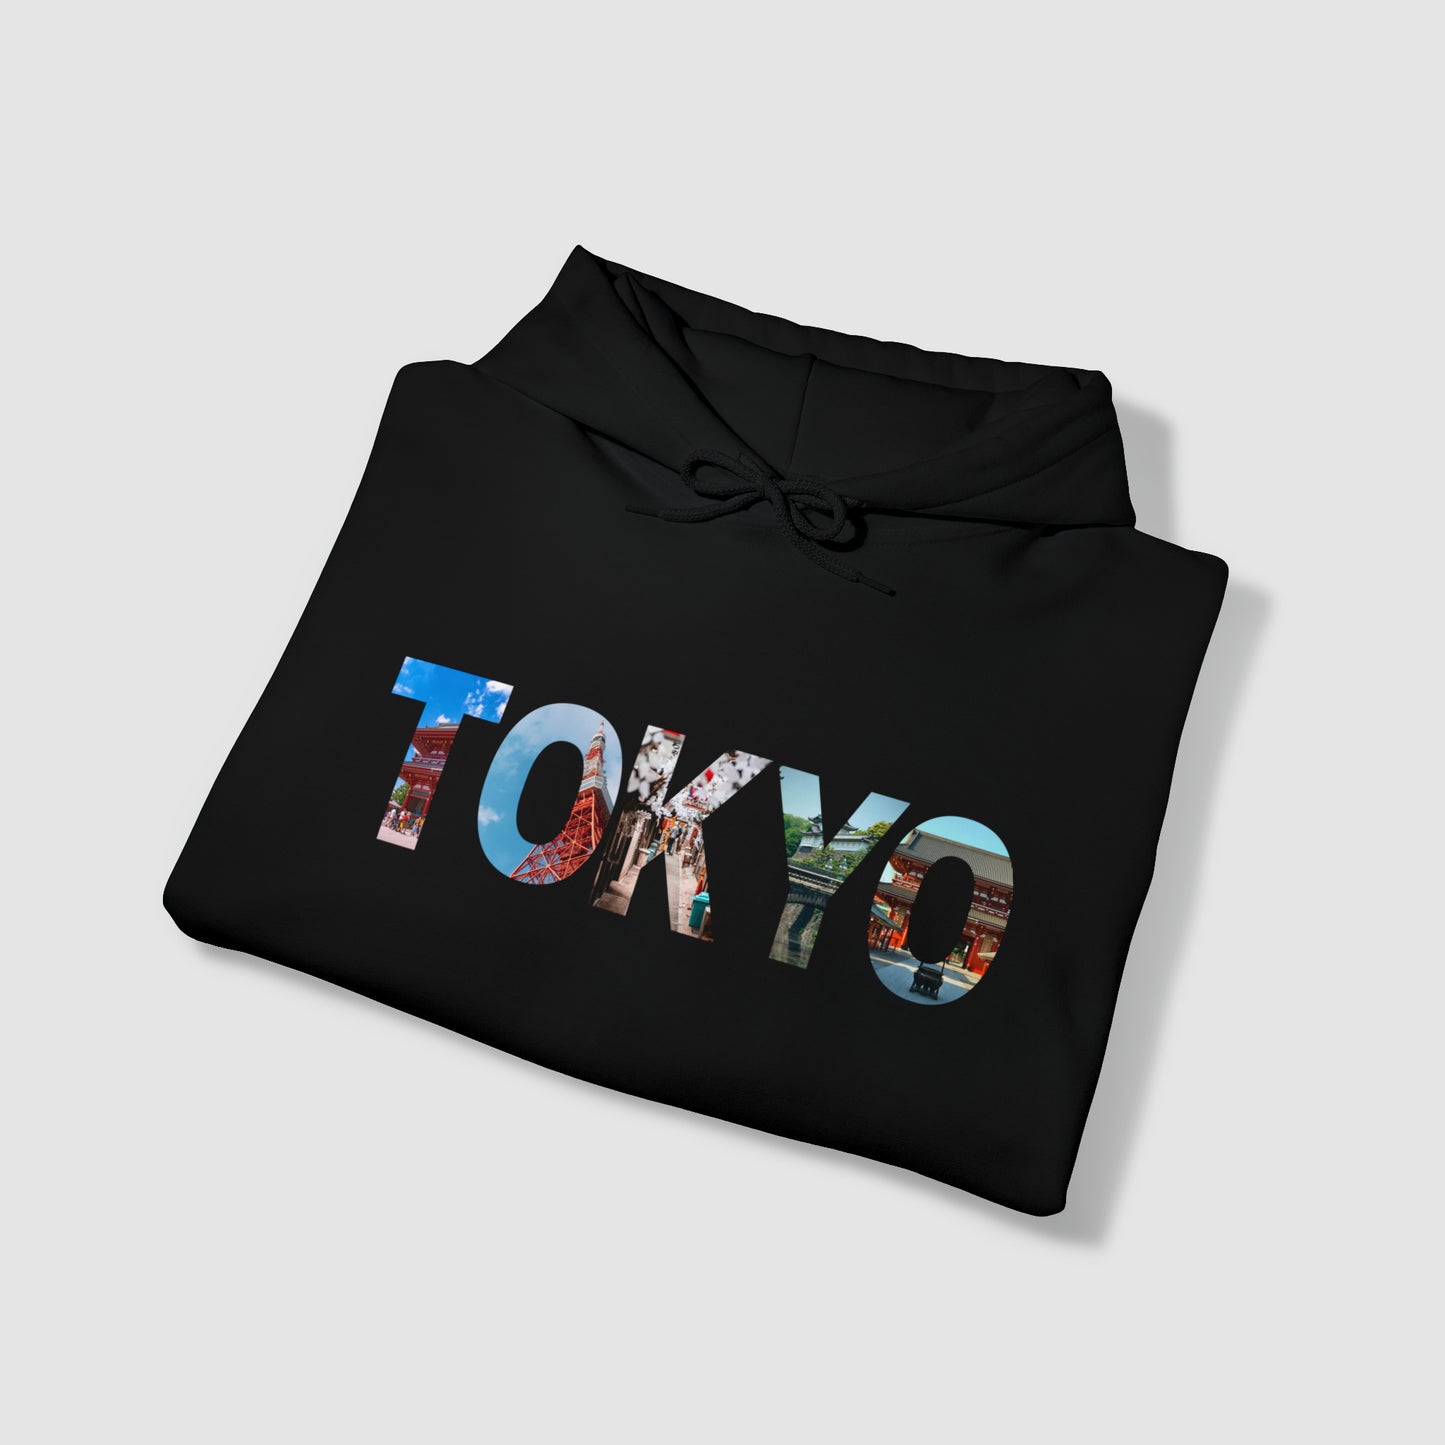 Tokyo Day Vista Typography Hoodie